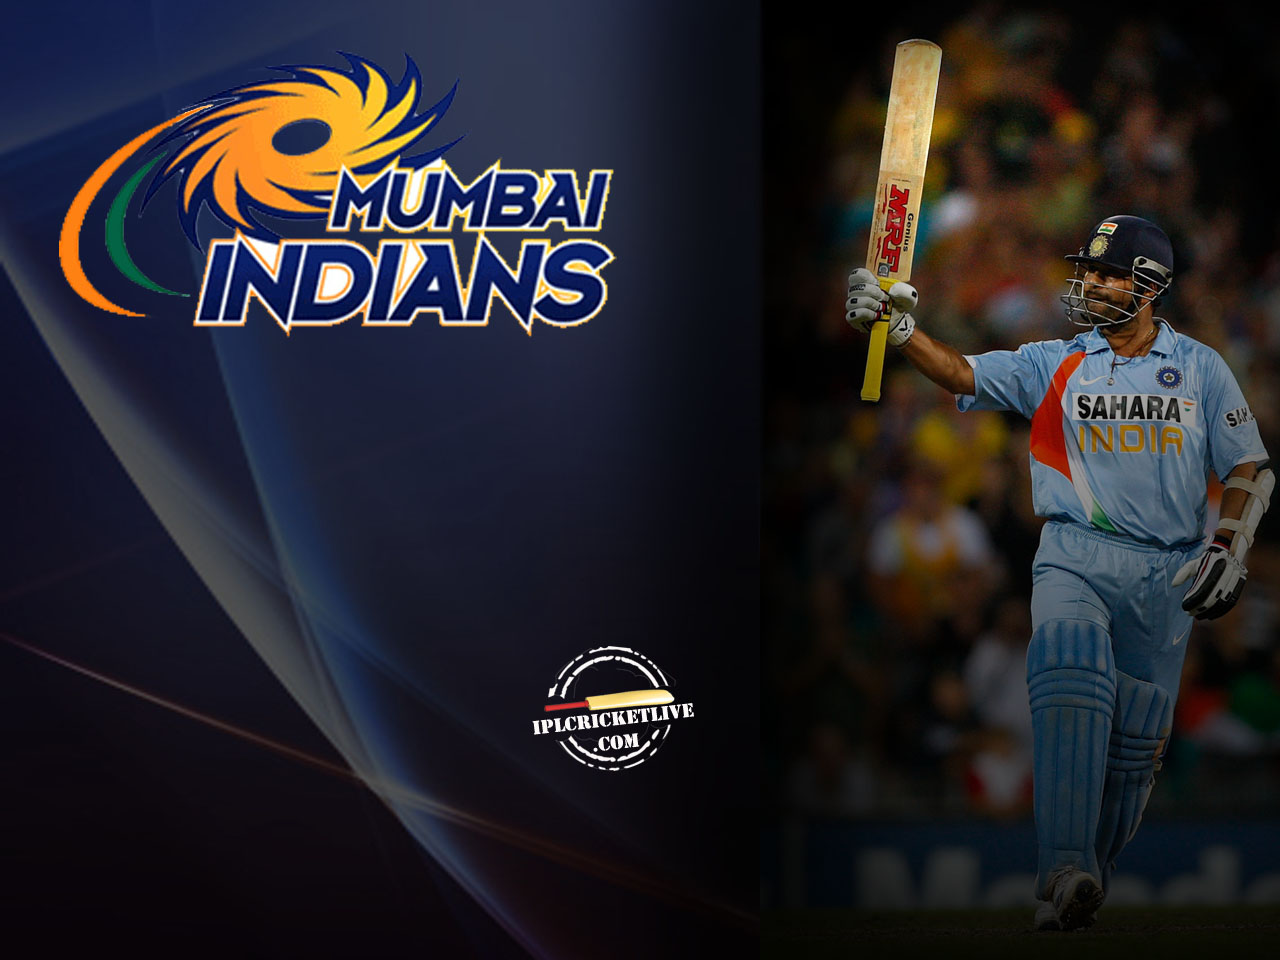 mumbai indians wallpaper,logo,font,championship,competition event,team sport